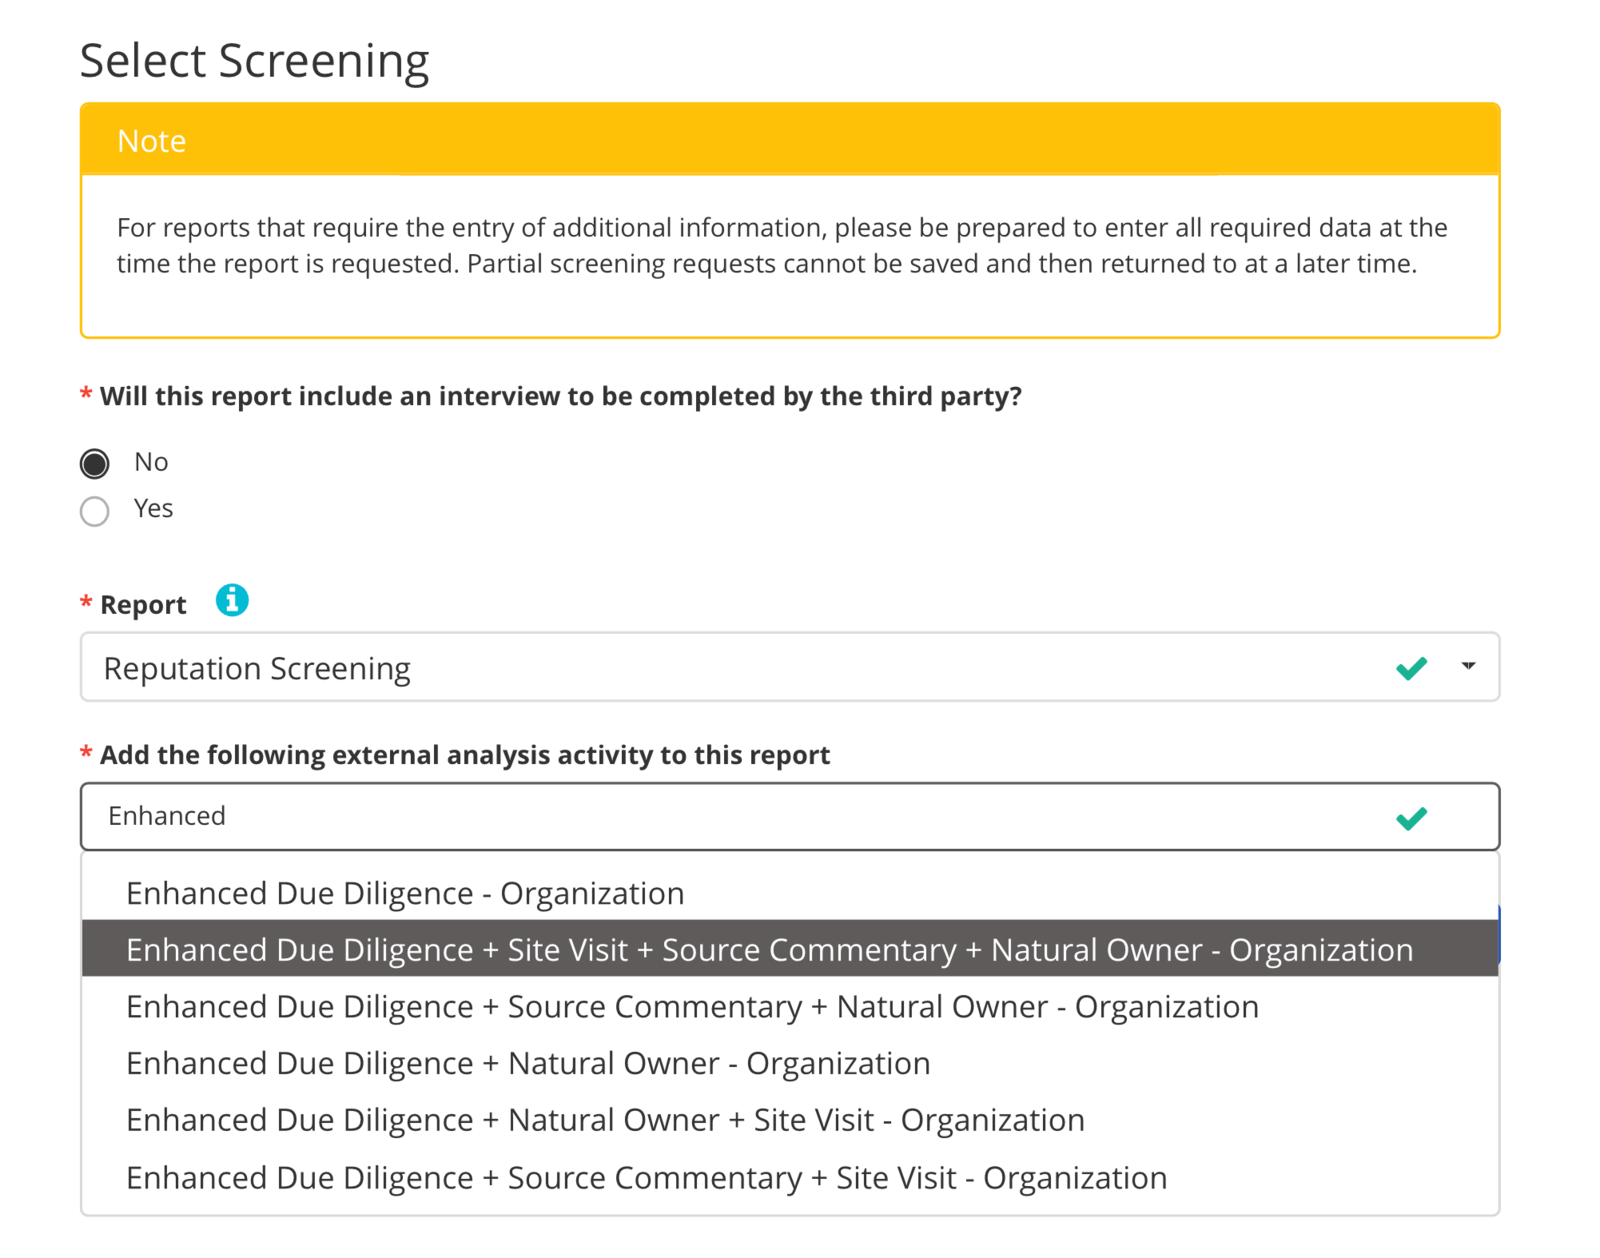 Select screening procedure